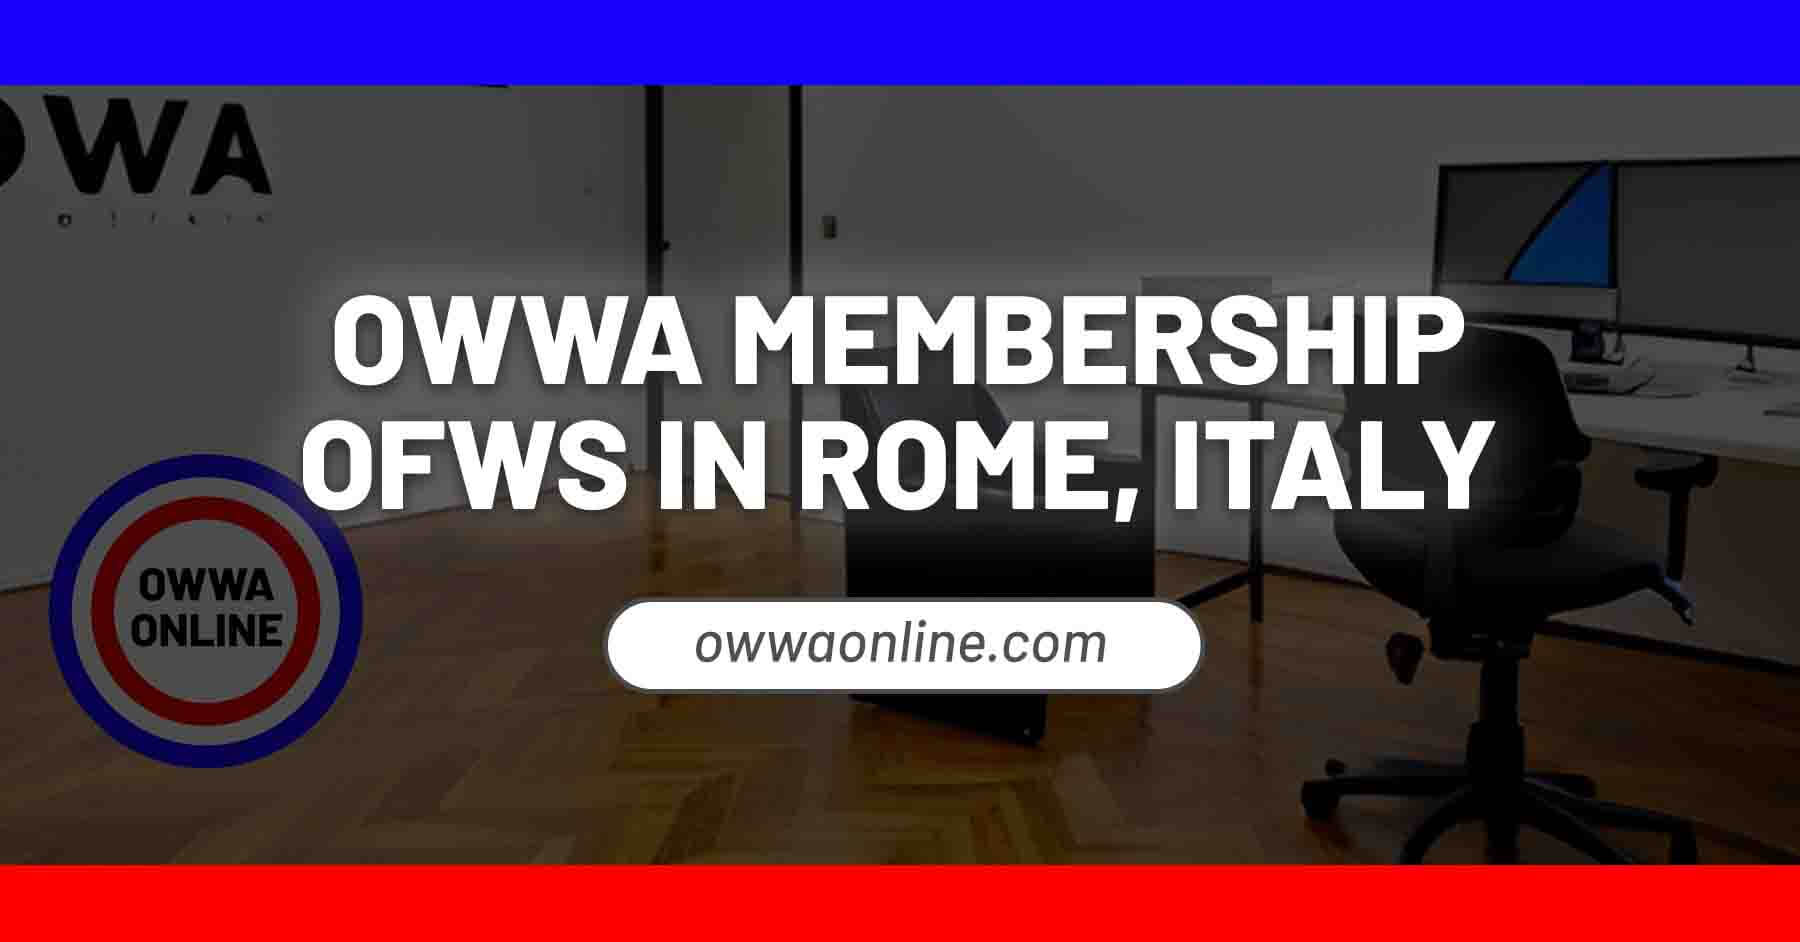 application for owwa membership renewal in rome italy